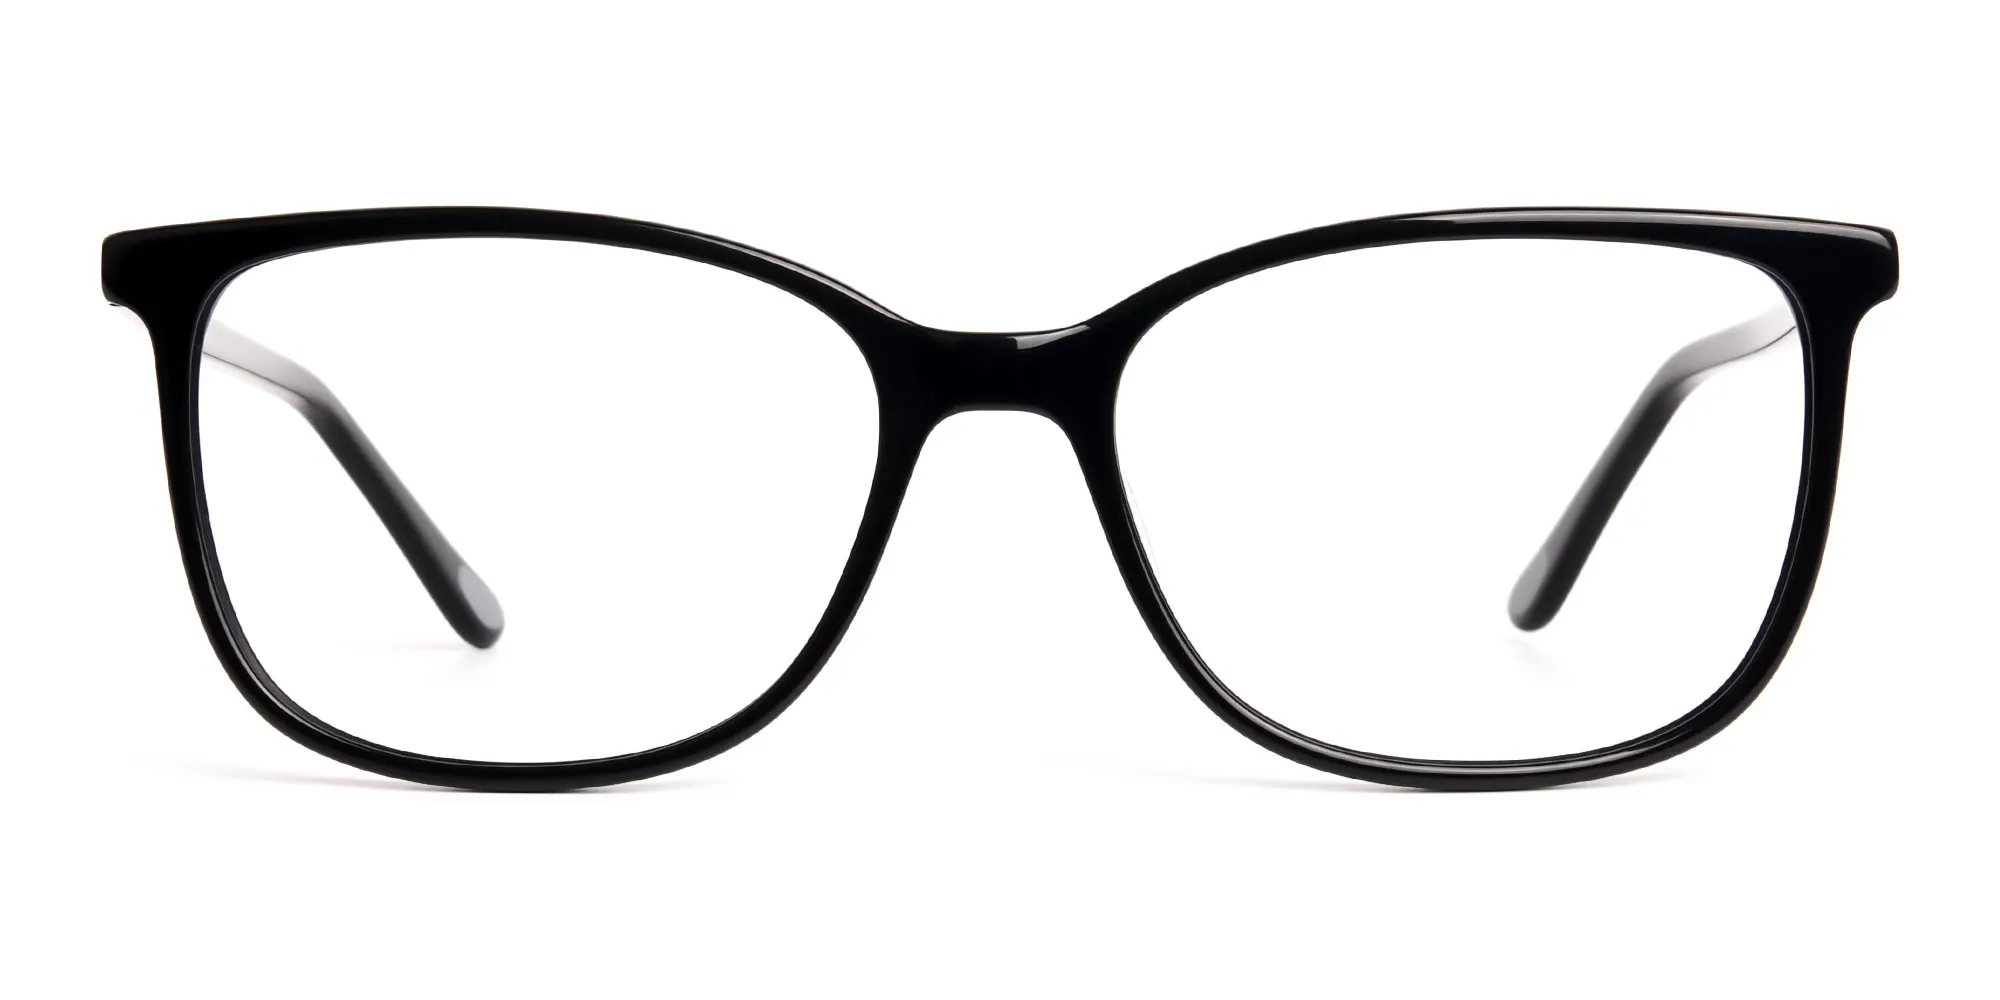 black-square-cateye-round-glasses-frames-2